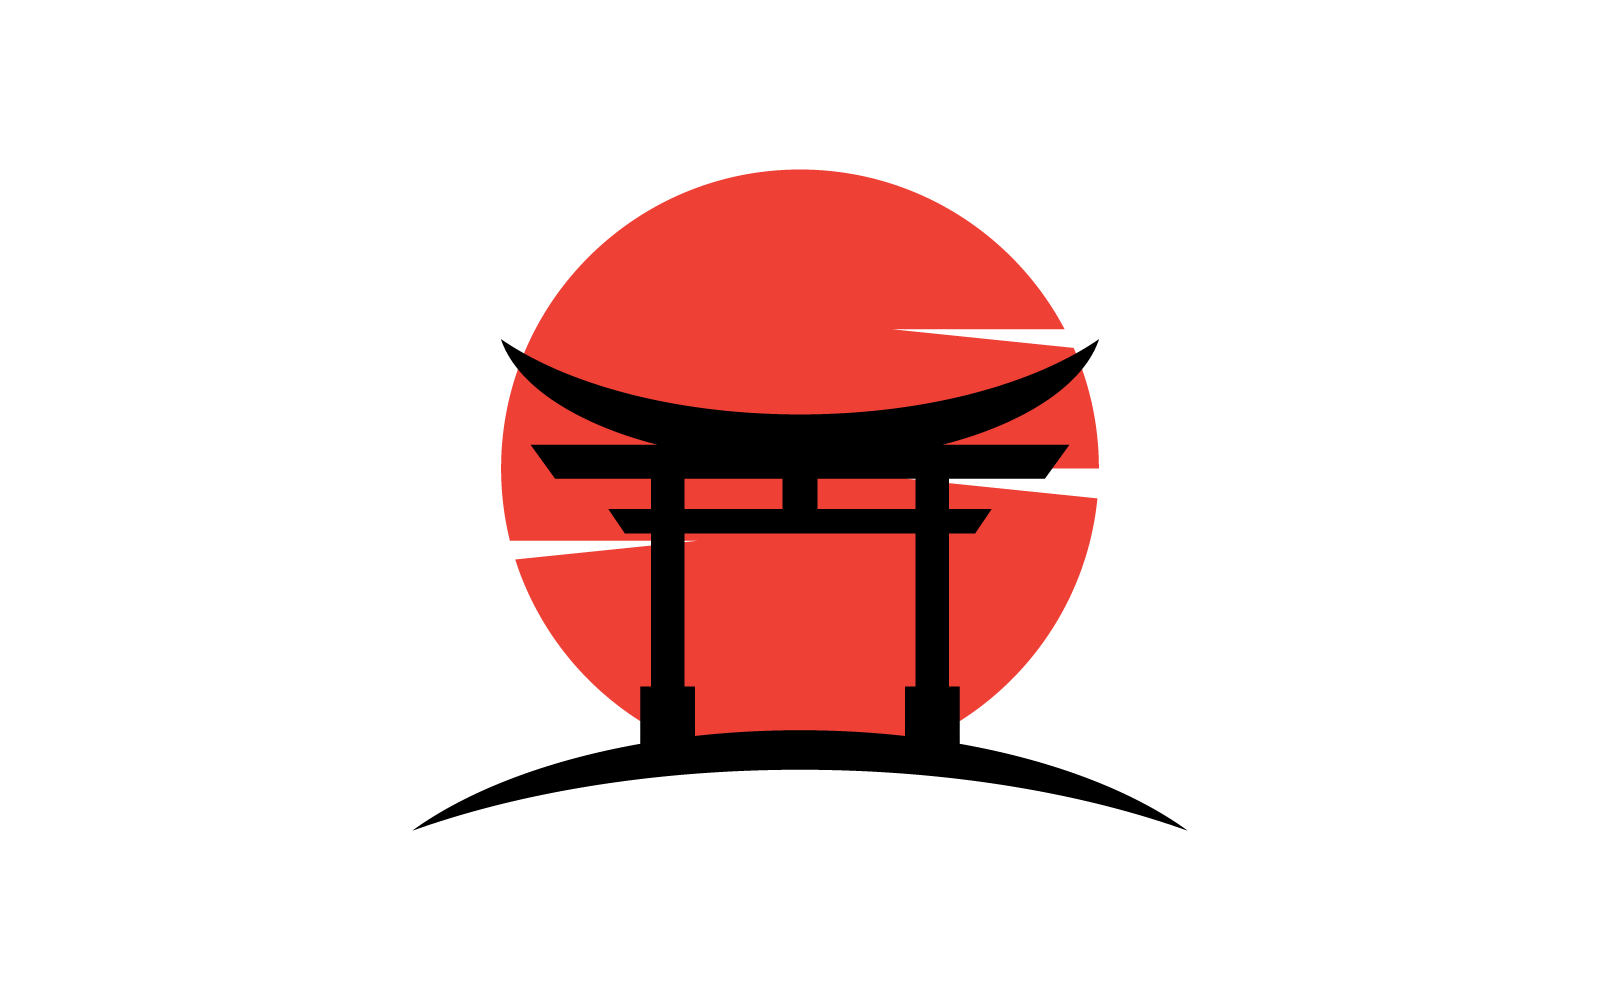 Torii gate and sun illustration logo vector design